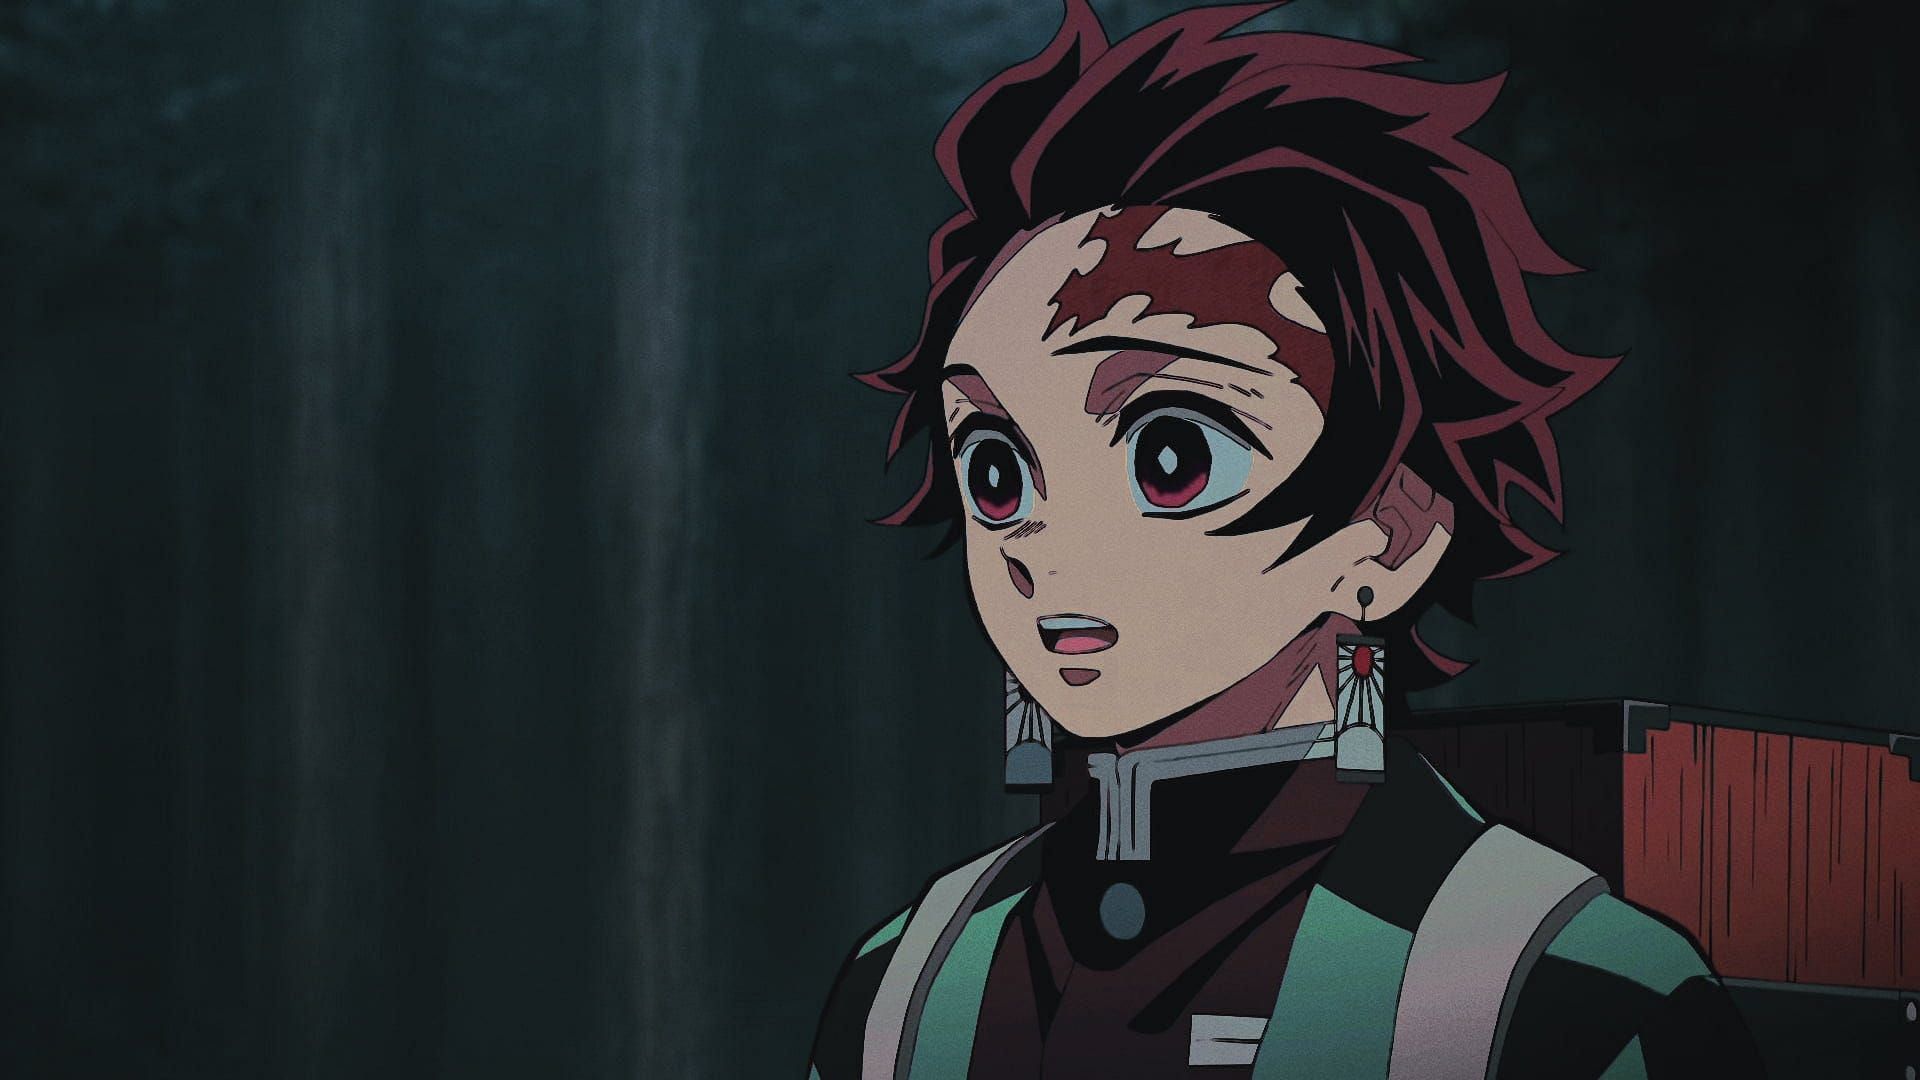 Tanjiro as seen in the anime (Image via Ufotable)